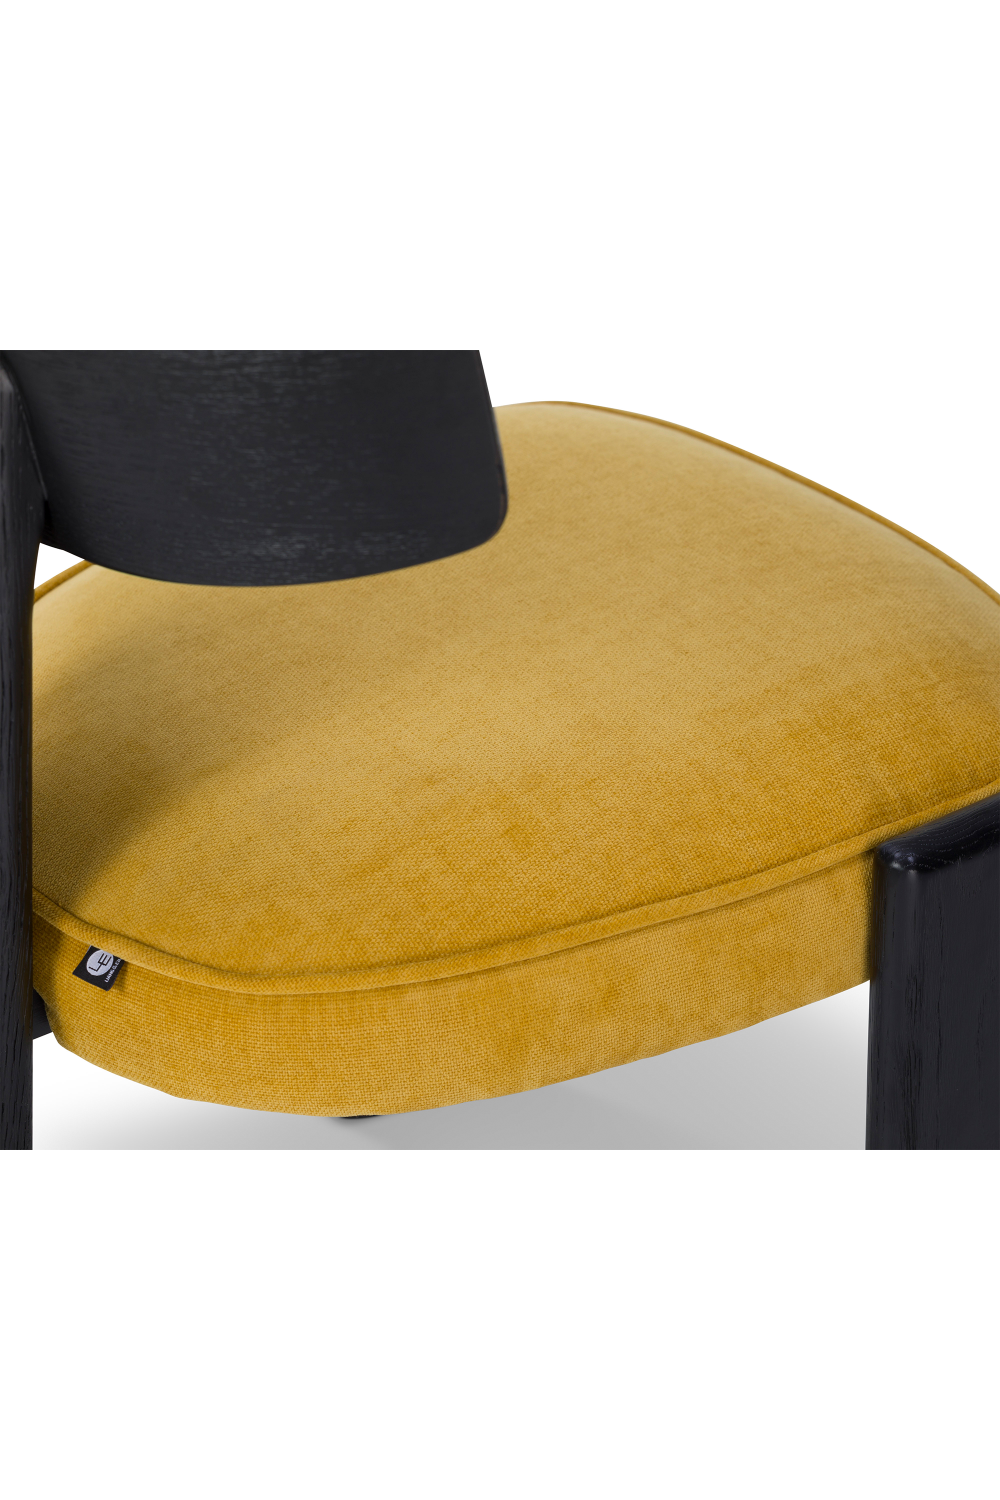 Oak Framed Dining Chairs (2) | Liang & Eimil Albi | Oroa.com